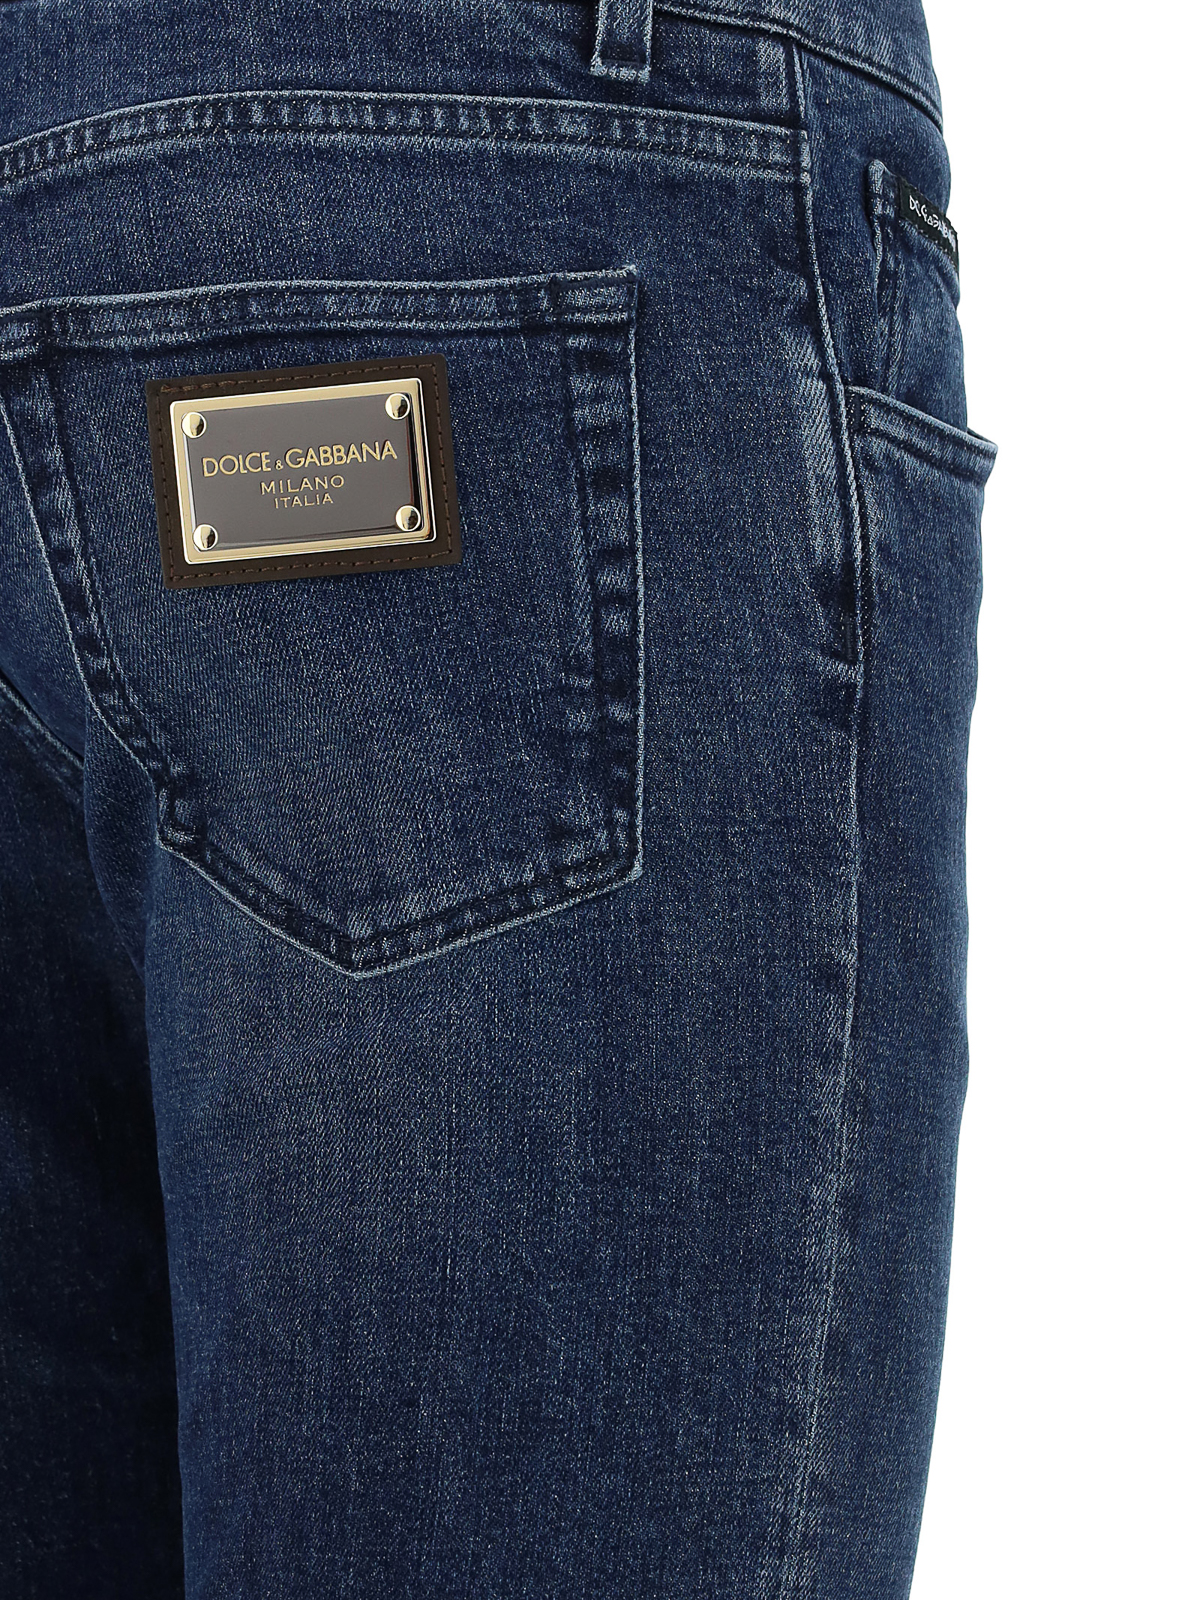 Straight leg jeans Dolce & Gabbana - Leo print cuff slim jeans ...